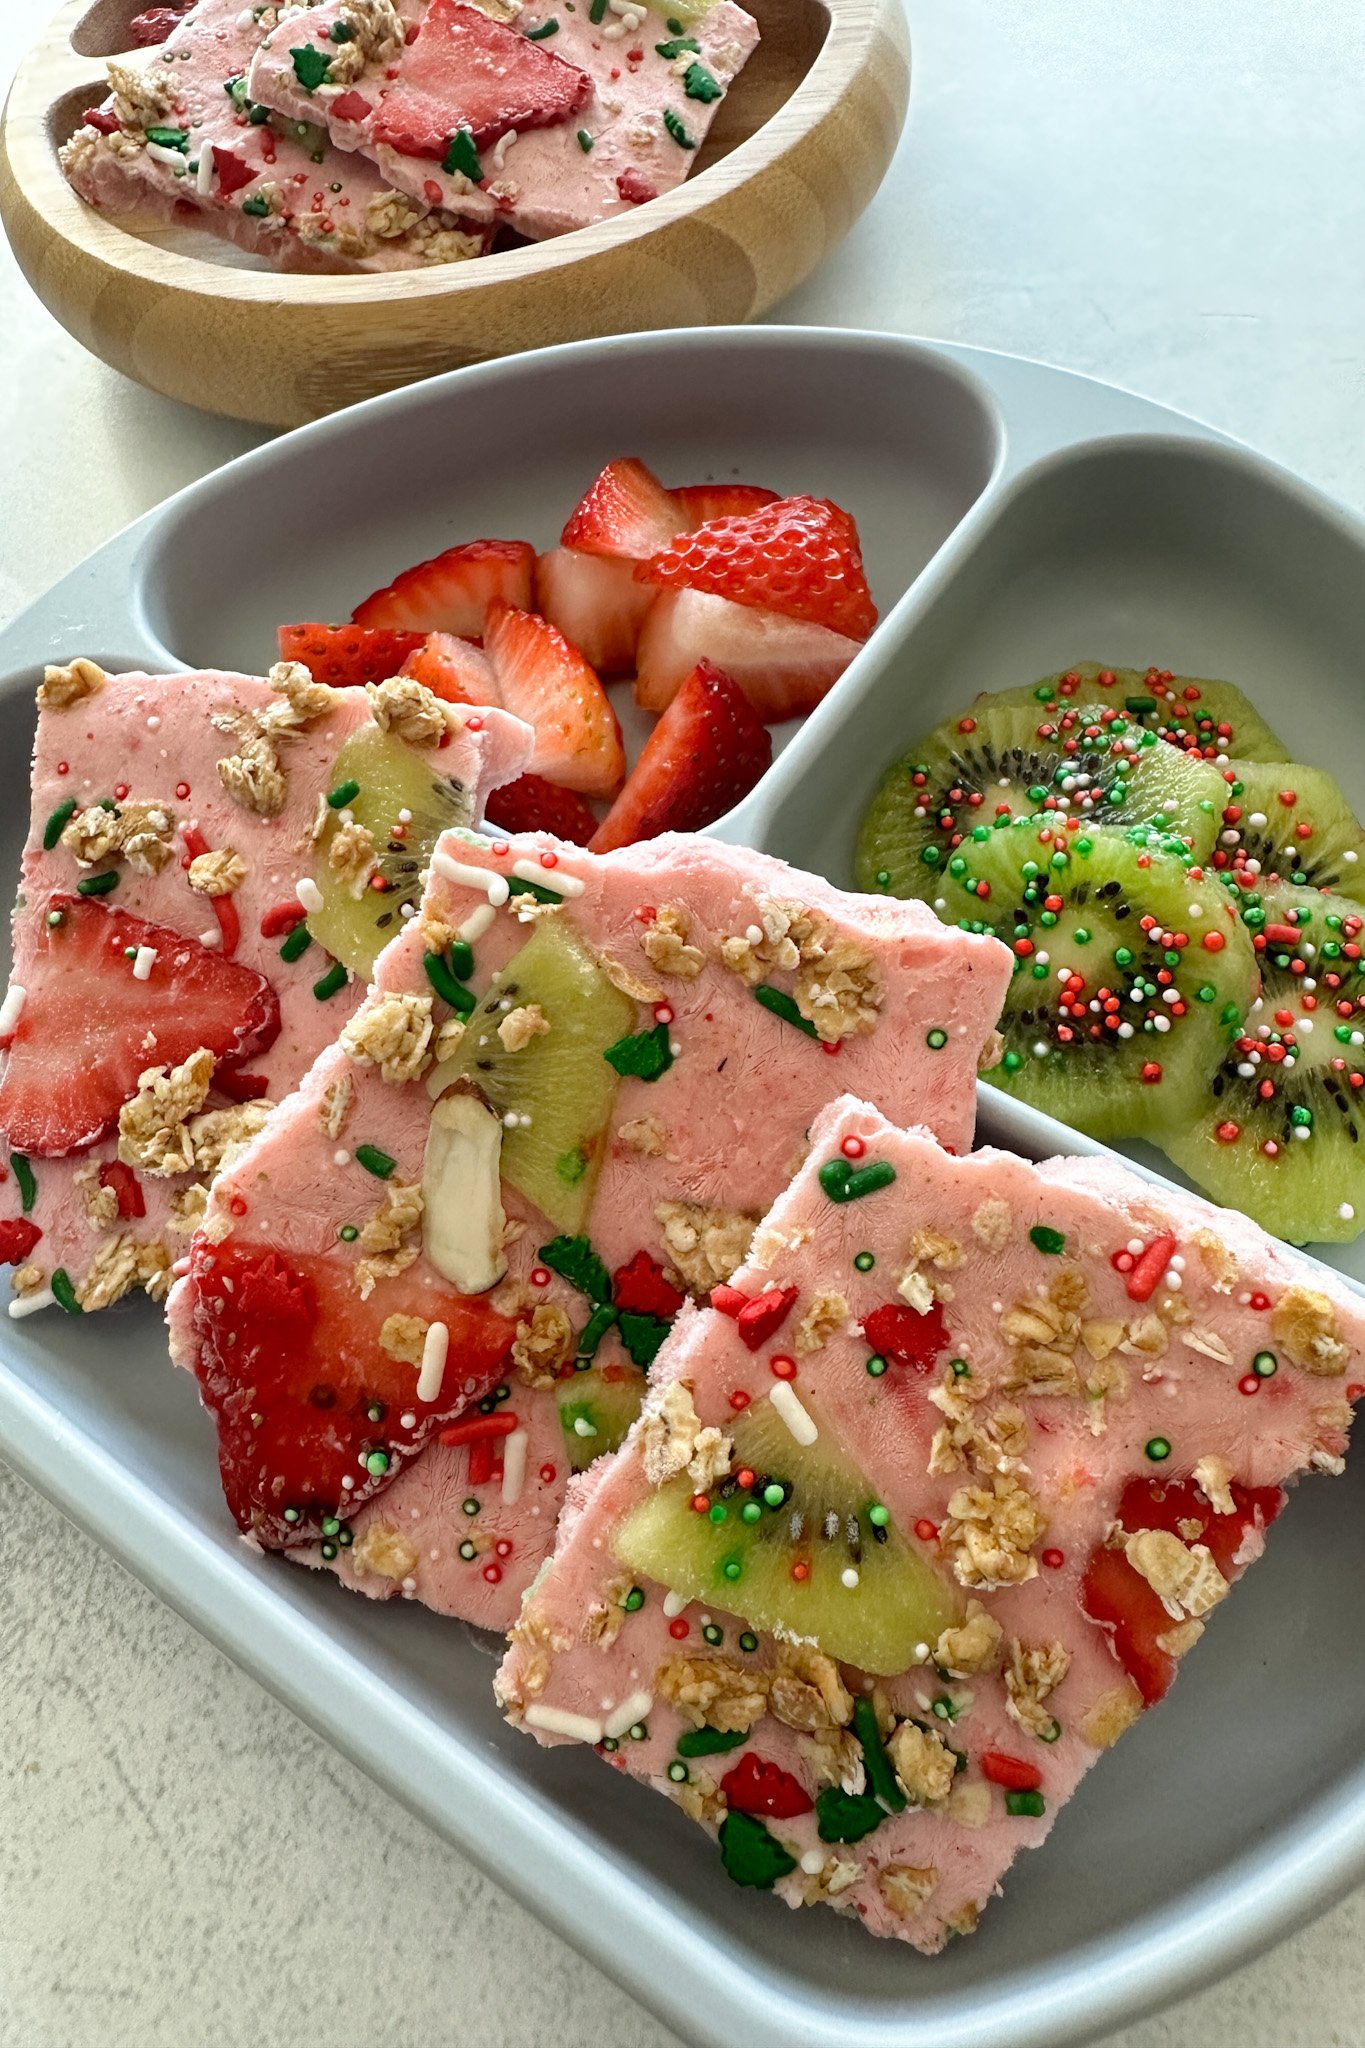 Strawberry yogurt bark served with fresh fruits.